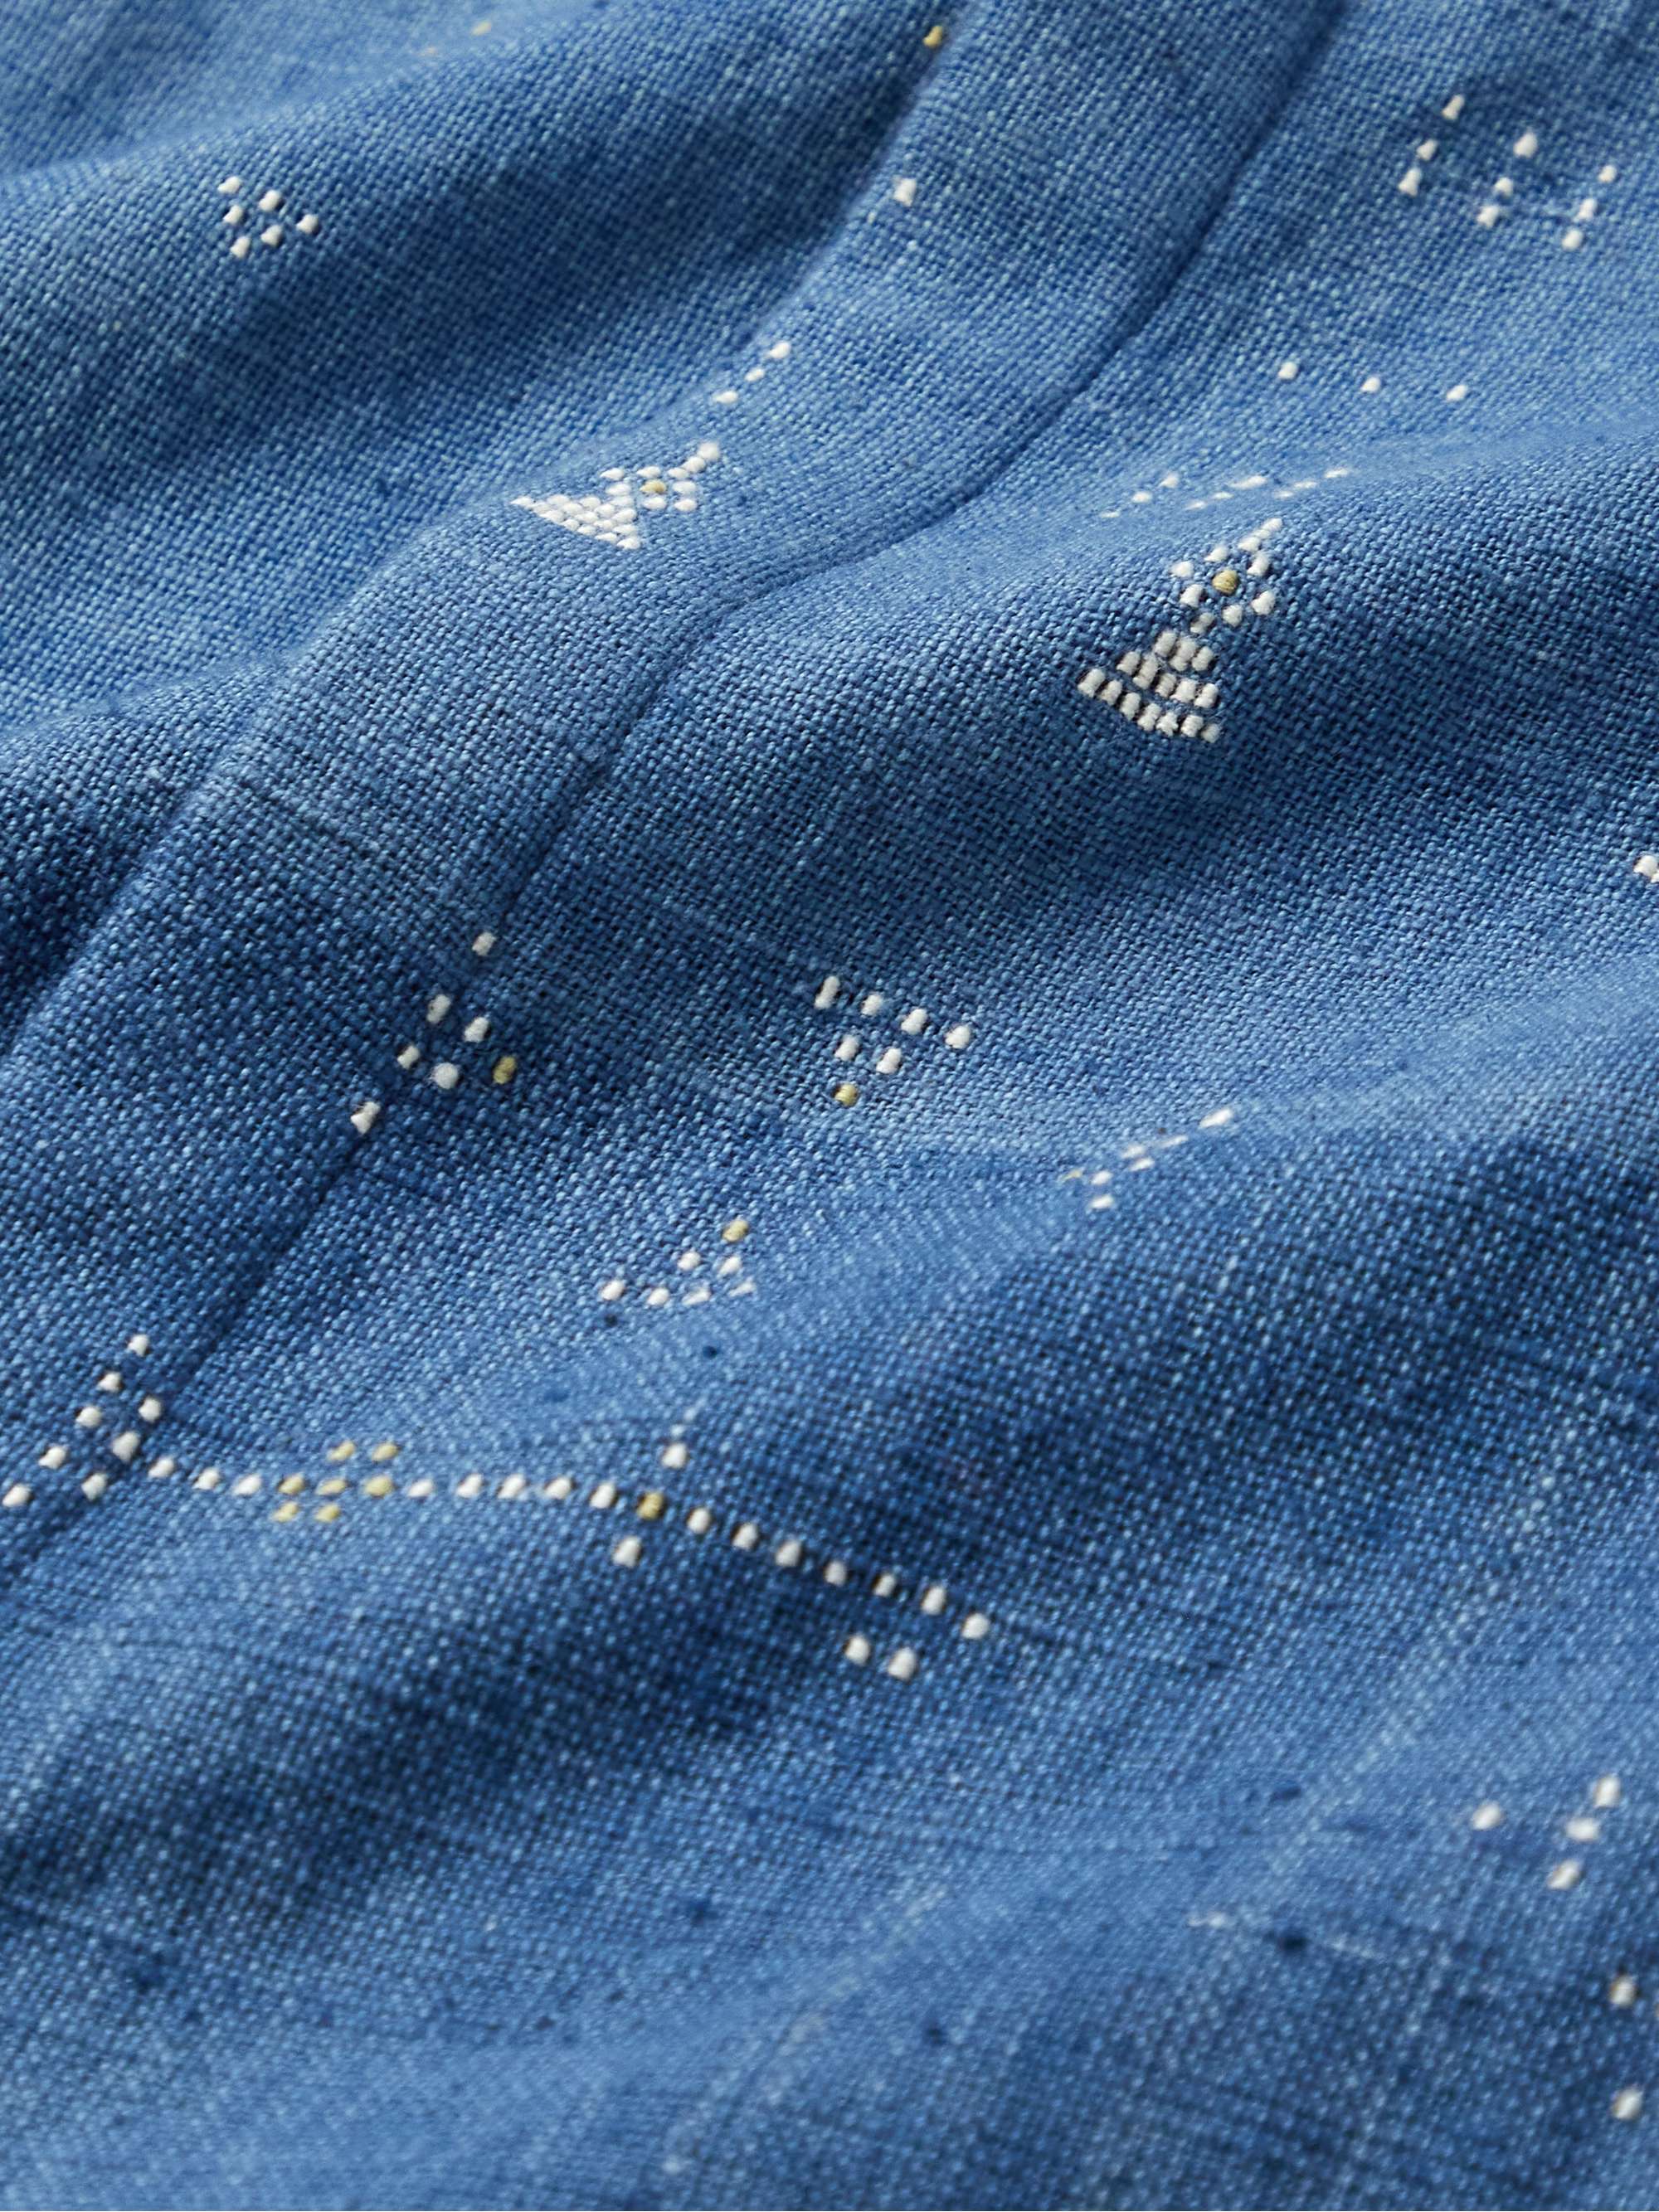 11.11/ELEVEN ELEVEN Embroidered Organic Cotton Shirt